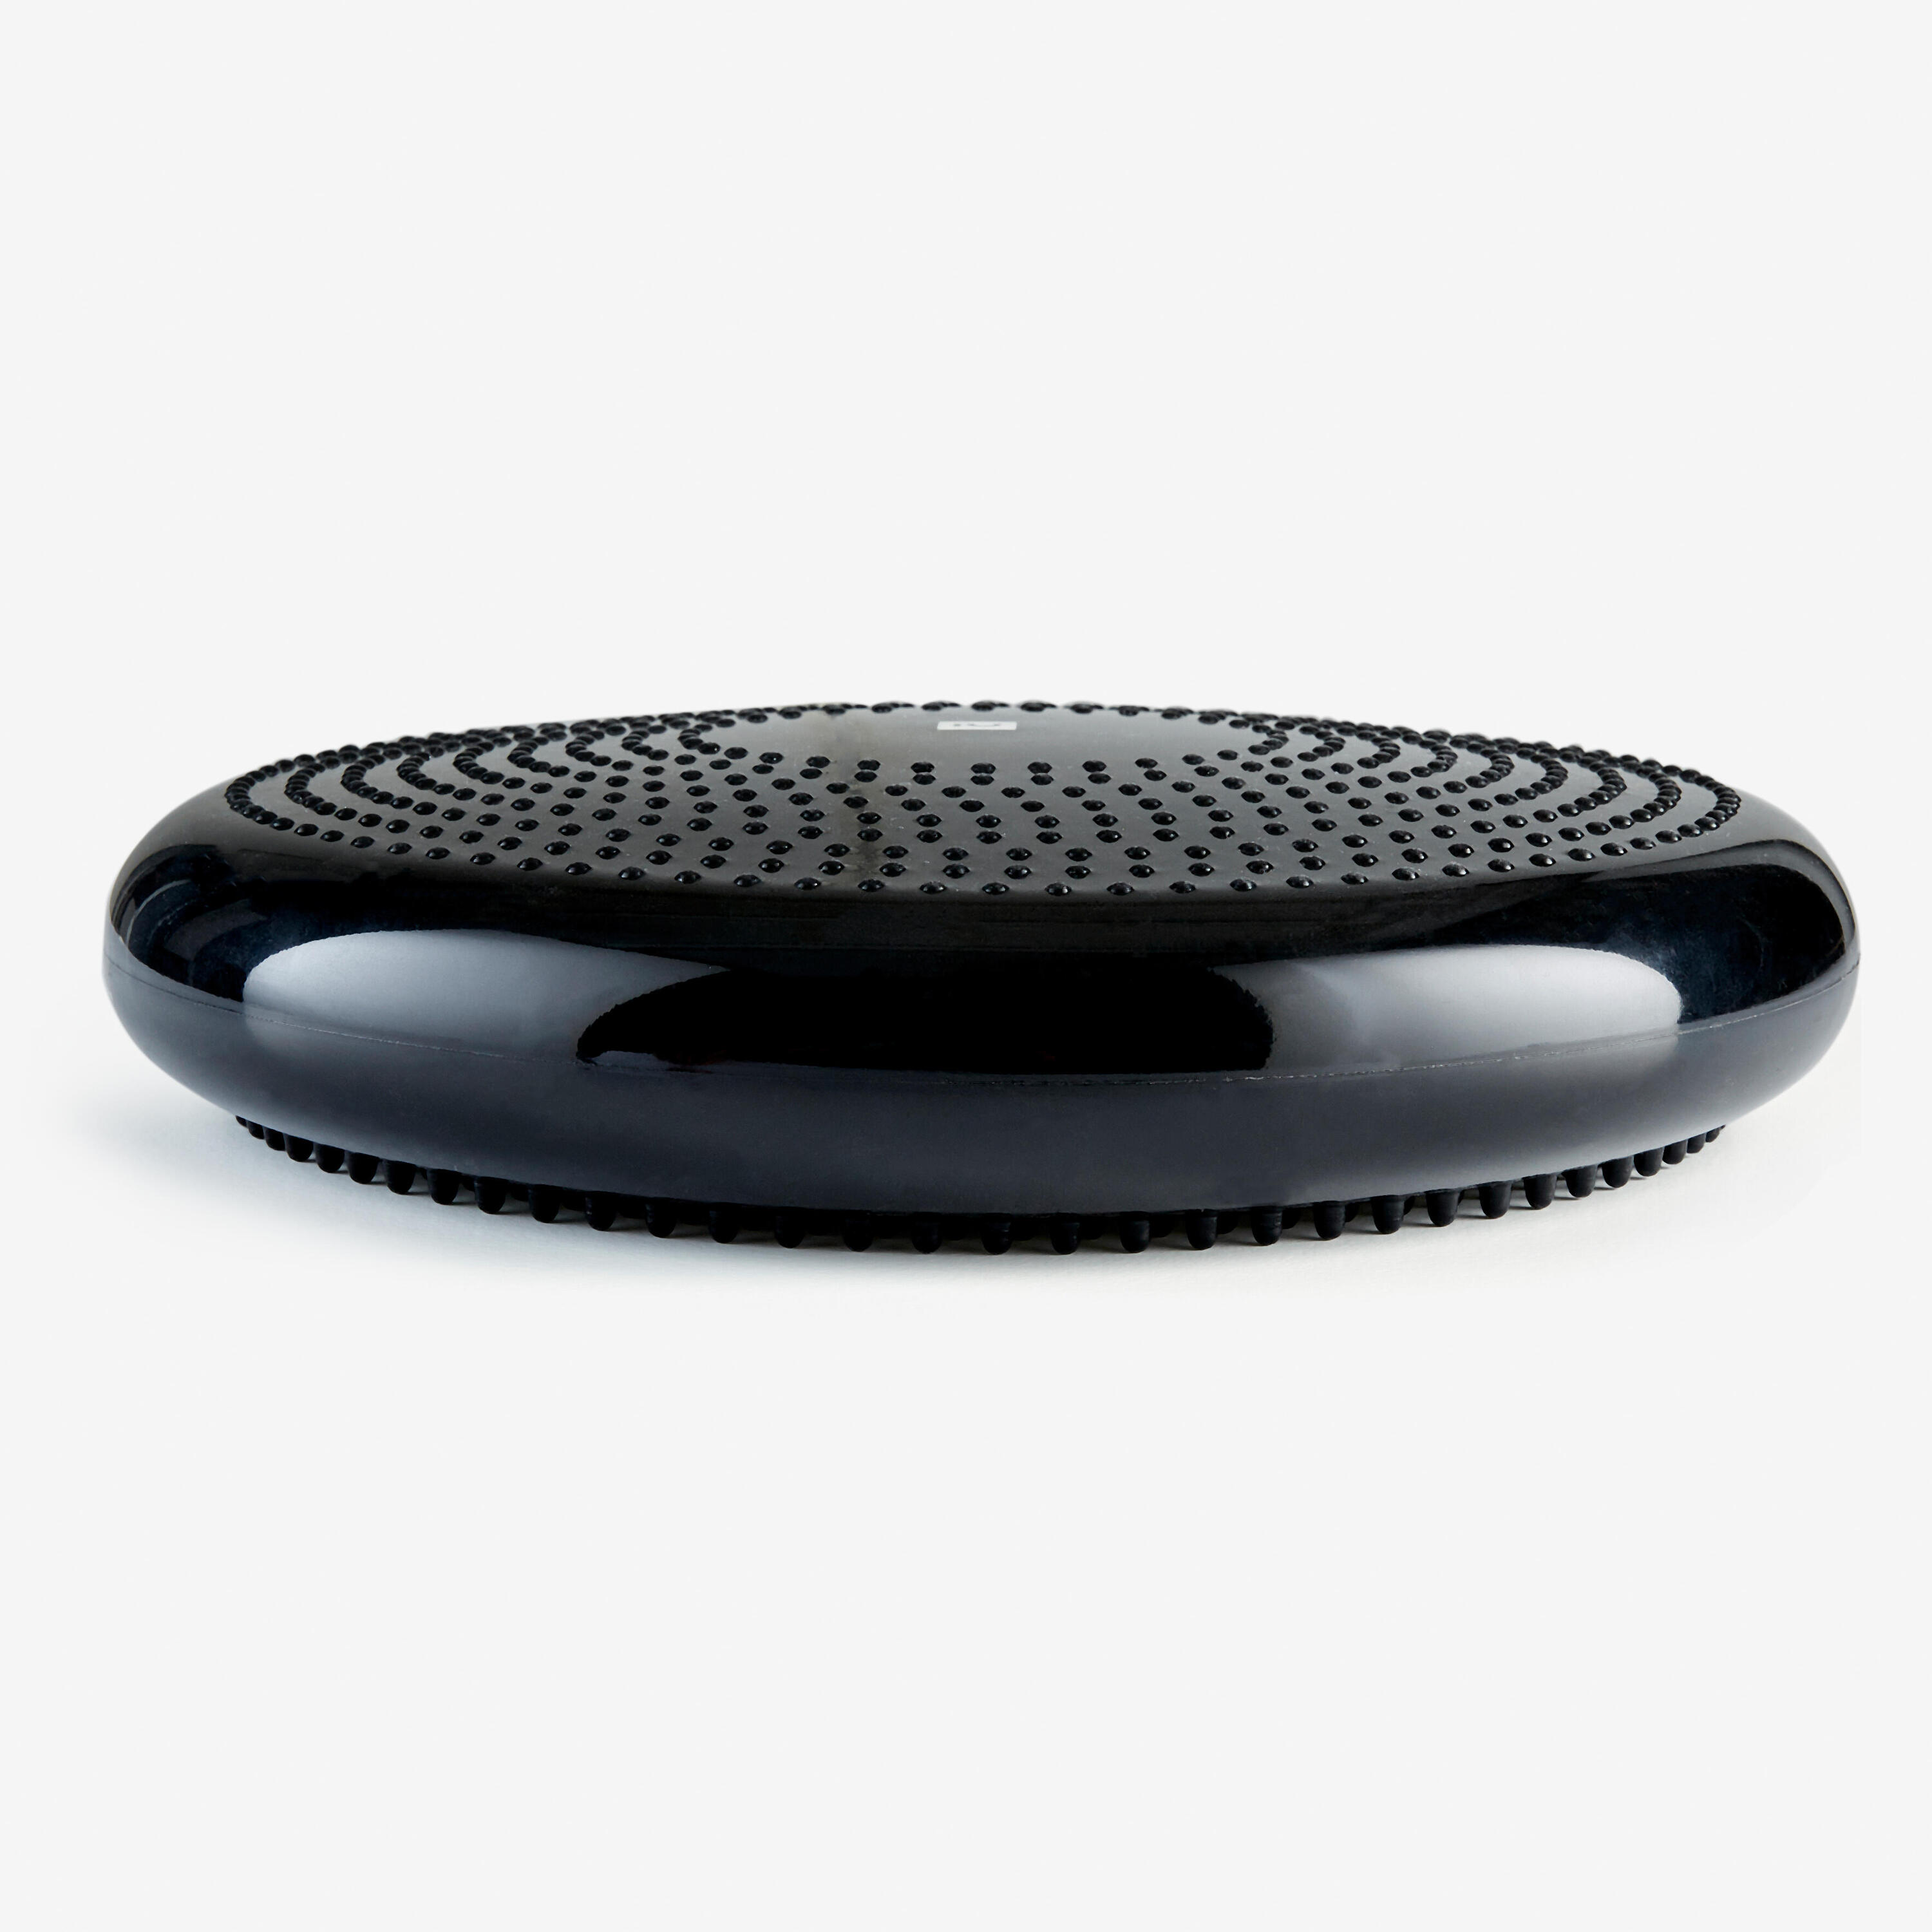 Reversible and Adjustable Fitness Balance Cushion - Black 2/4